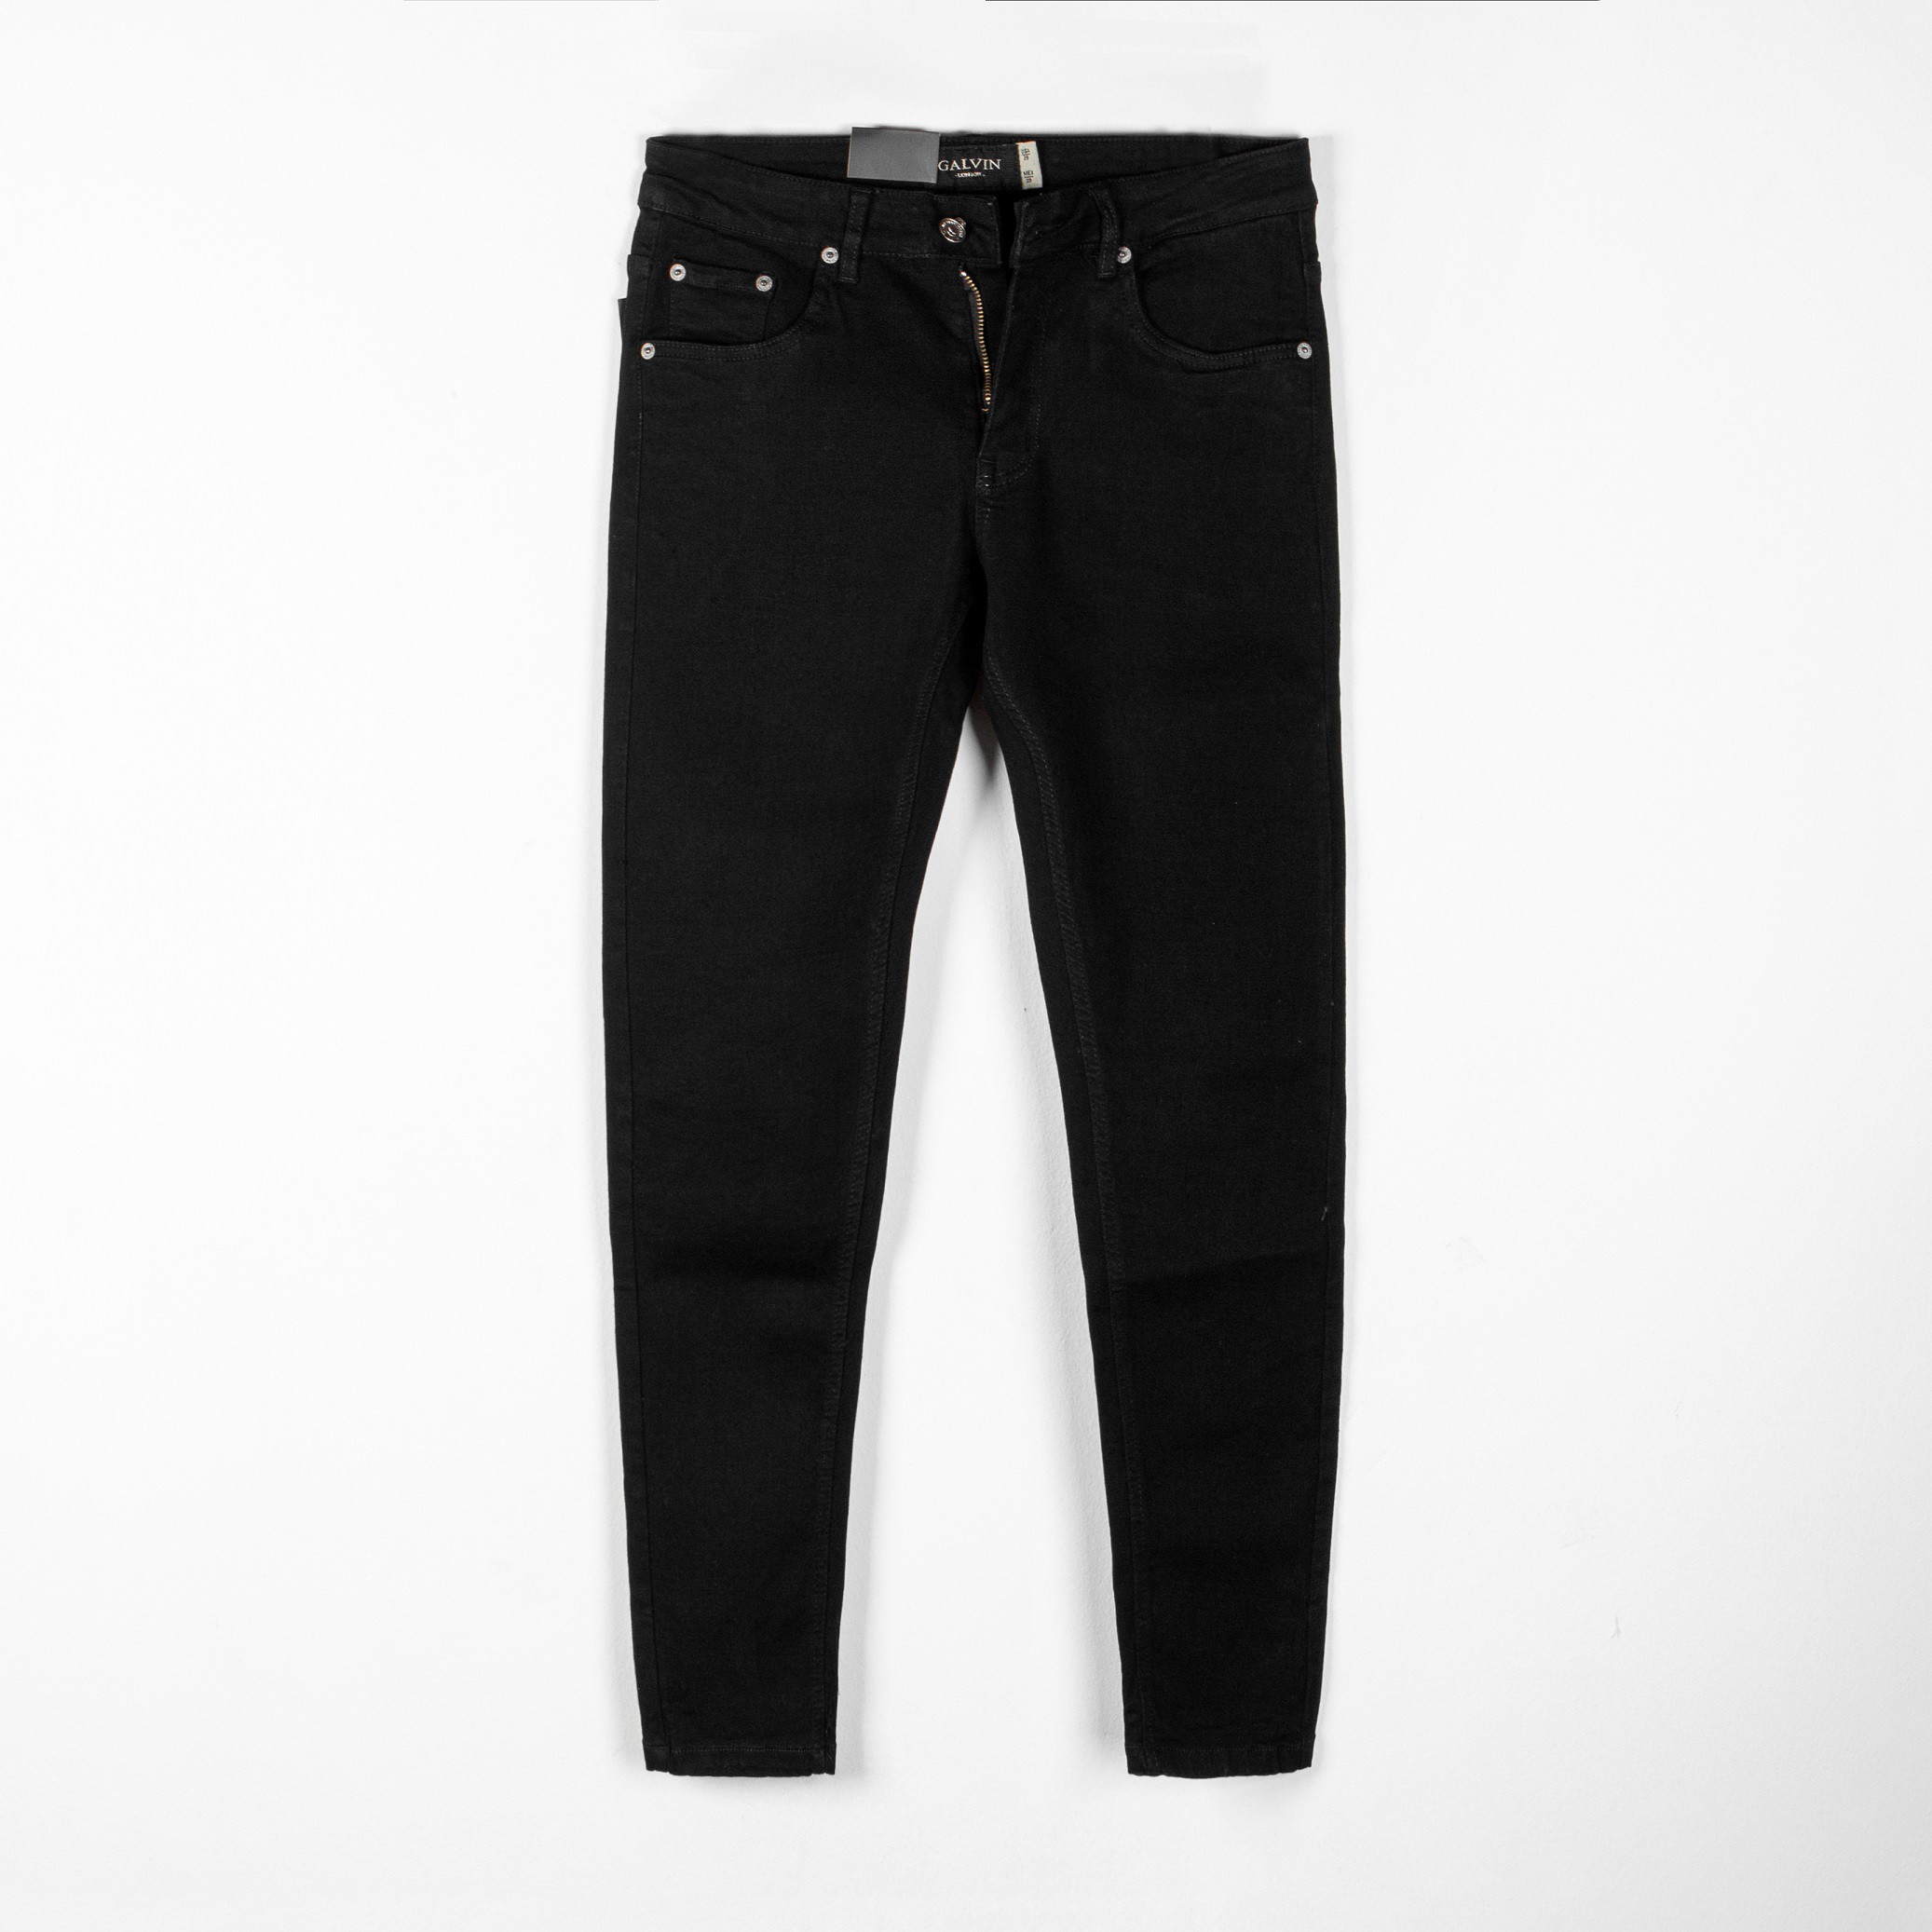 Quần Jeans nam đen trơn Galvin basic chất co giãn form slimfit QJGV32 - Leo Vatino